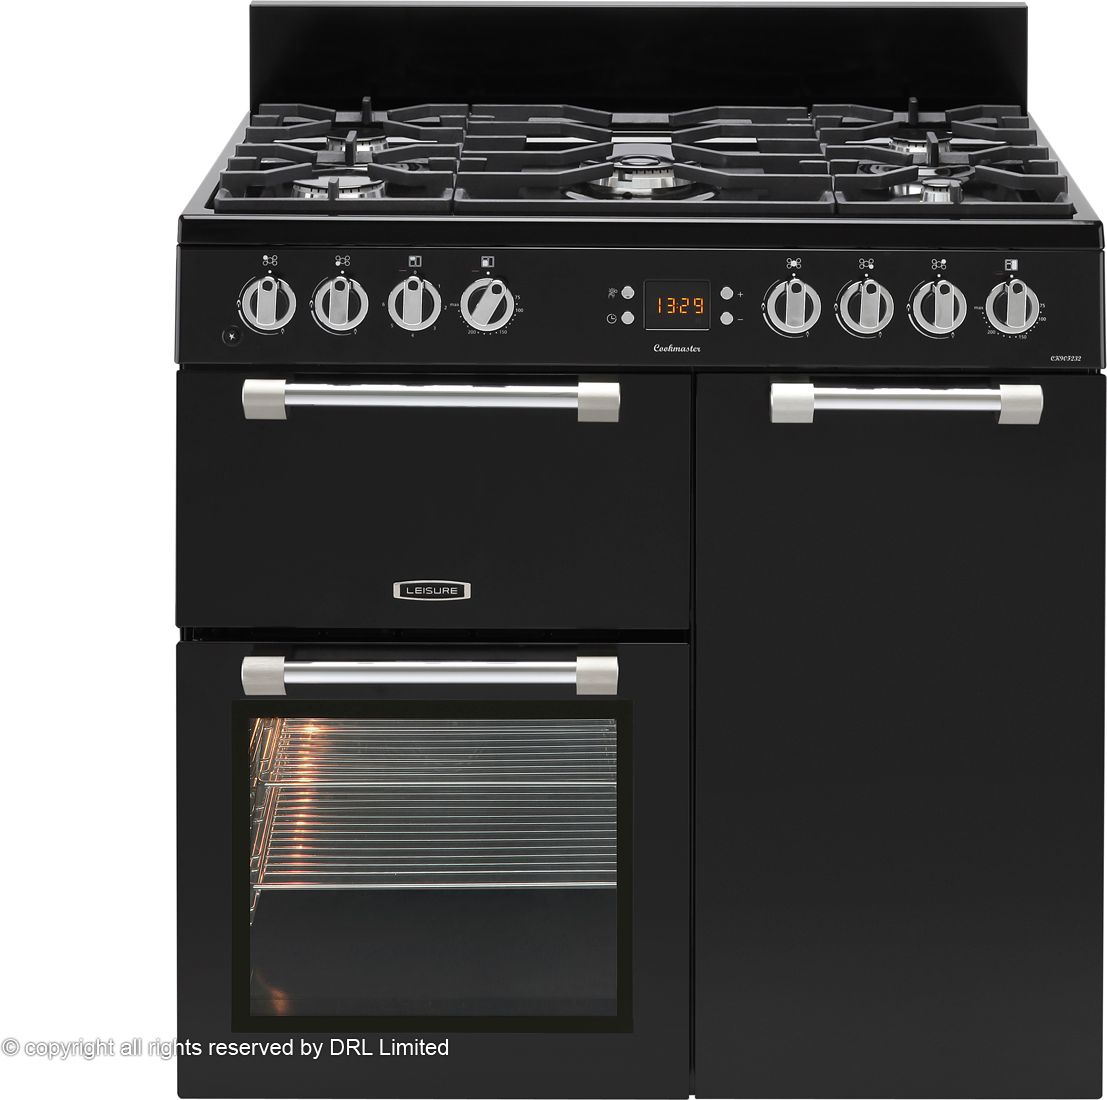 Leisure Cookmaster CK90F232K 90cm Dual Fuel Range Cooker - Black - A/A Rated, Black